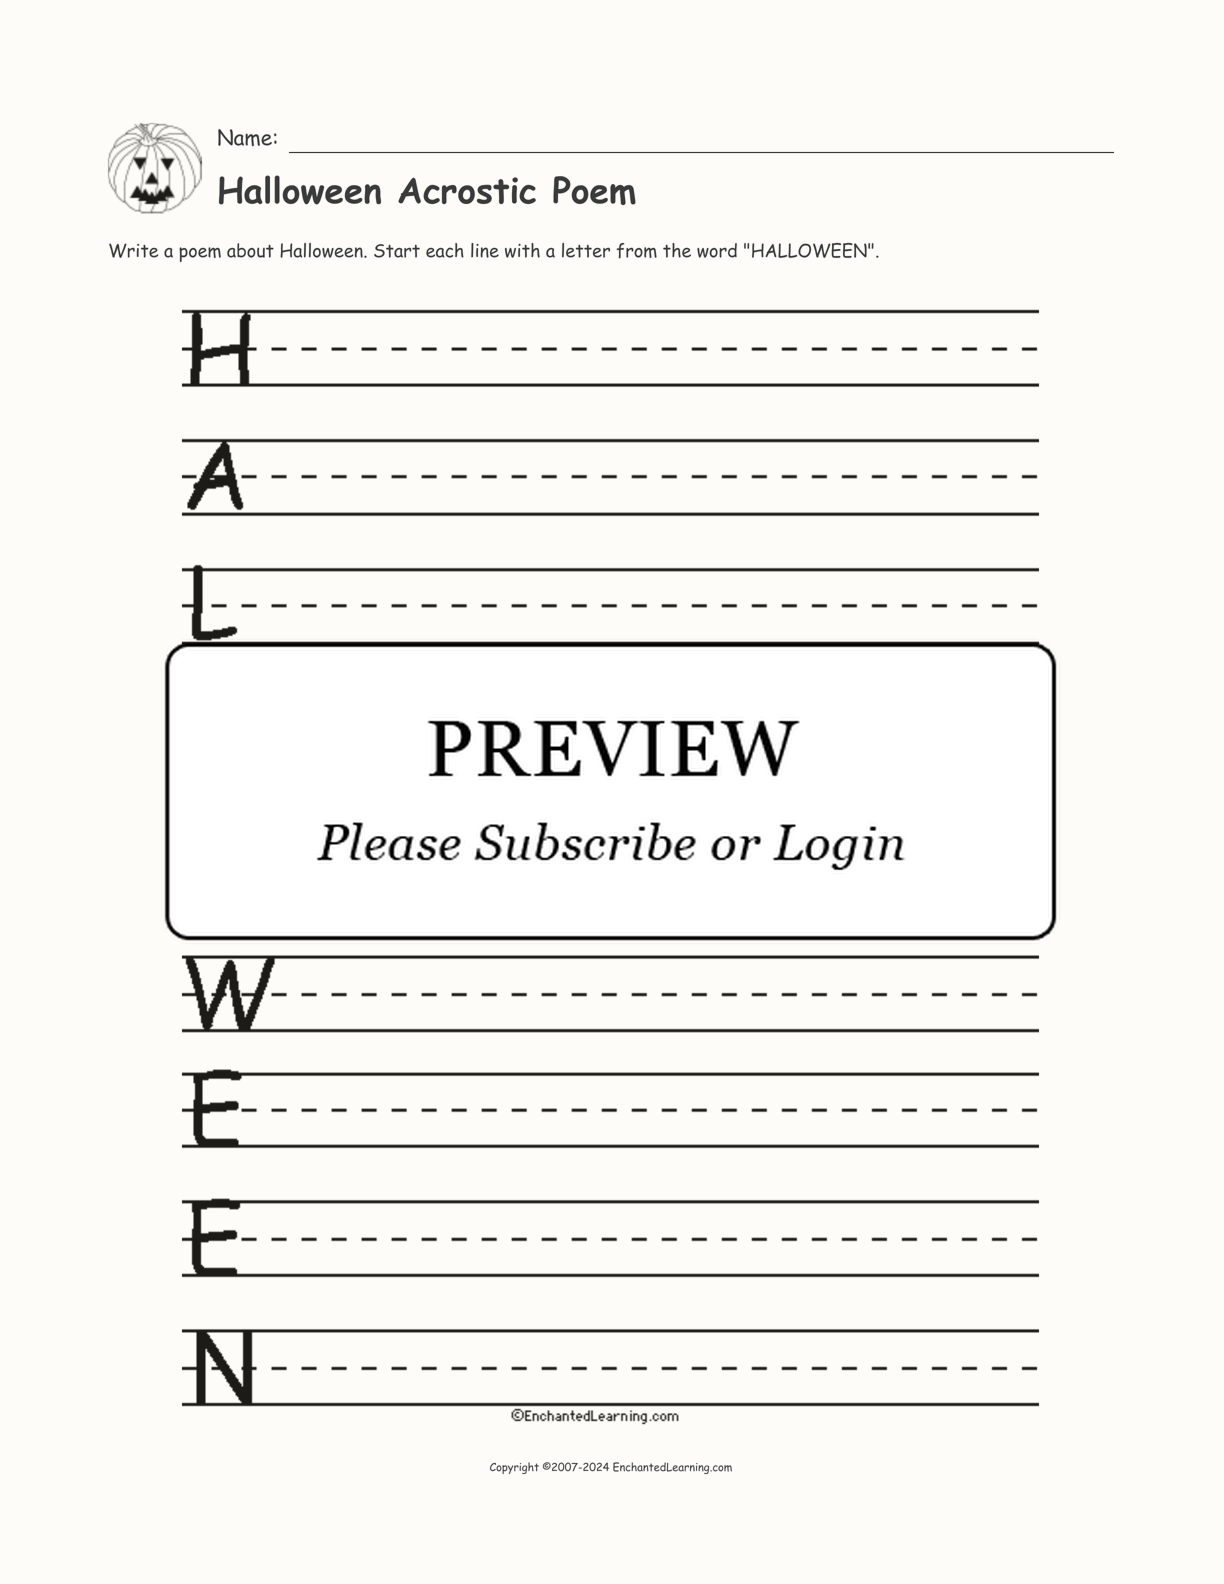 Halloween Acrostic Poem interactive printout page 1